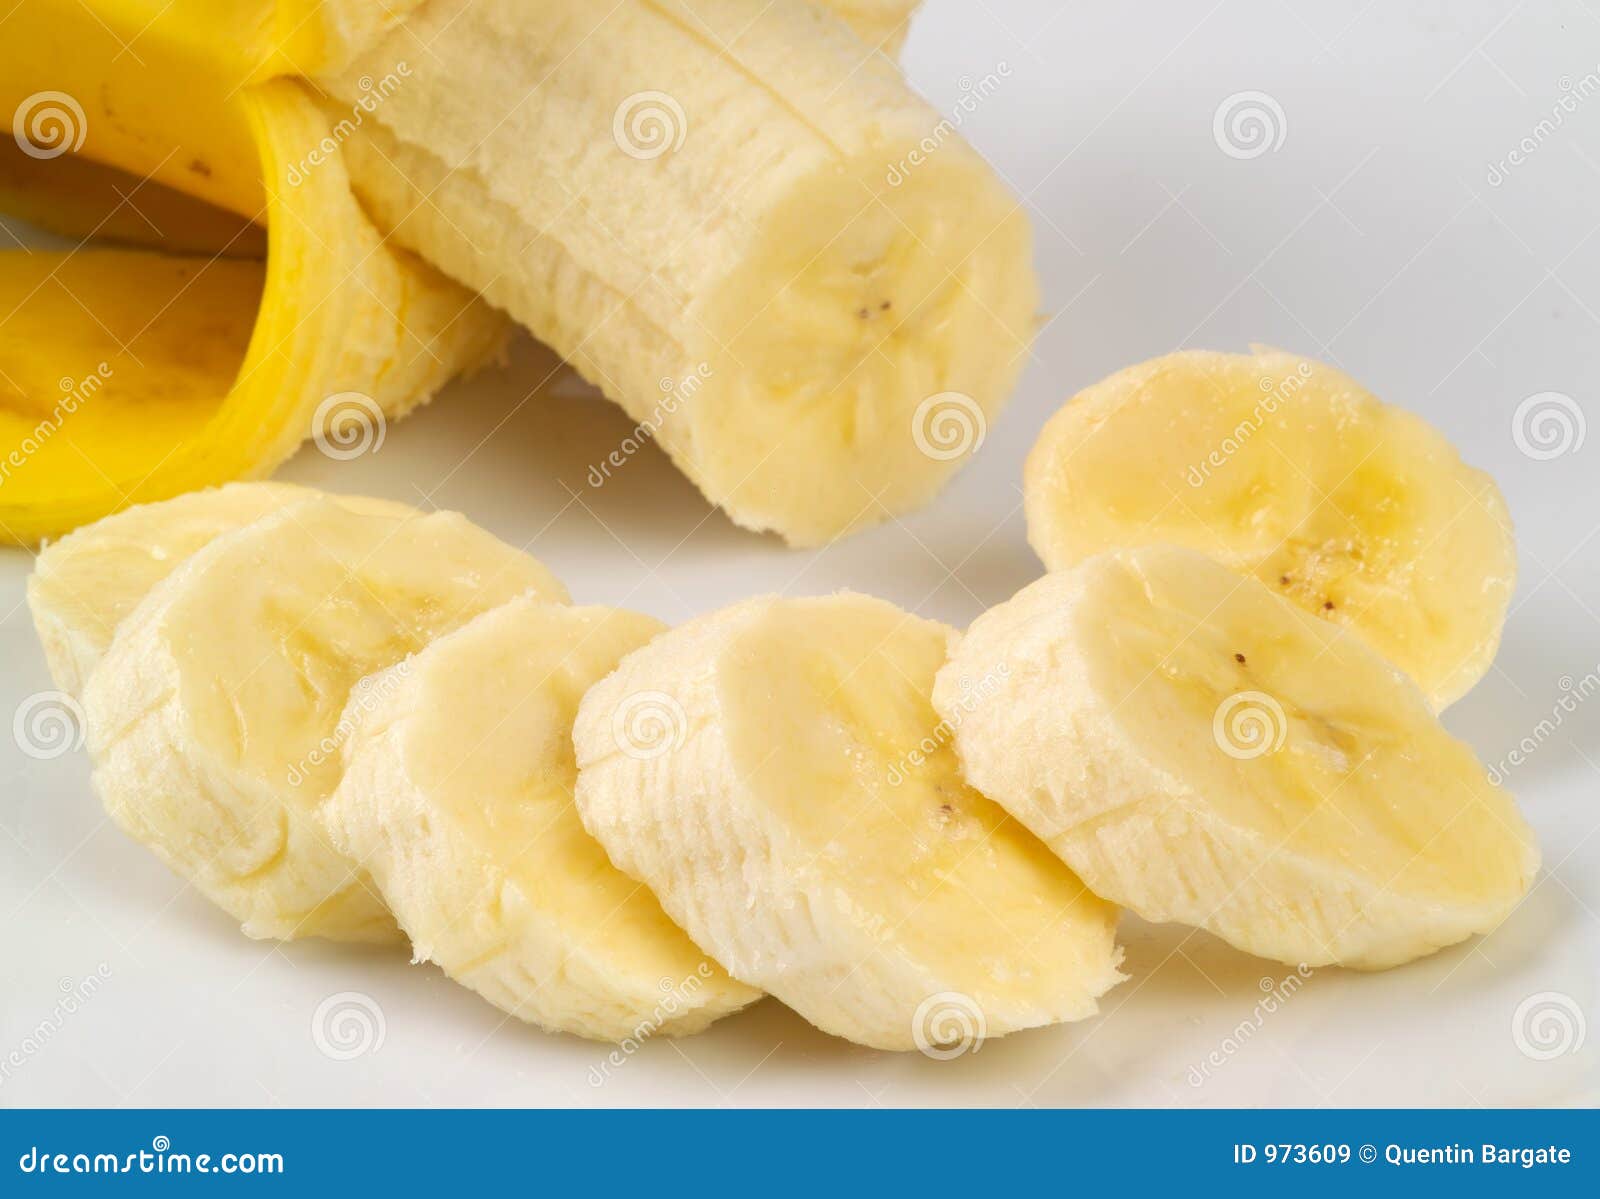 sliced banana